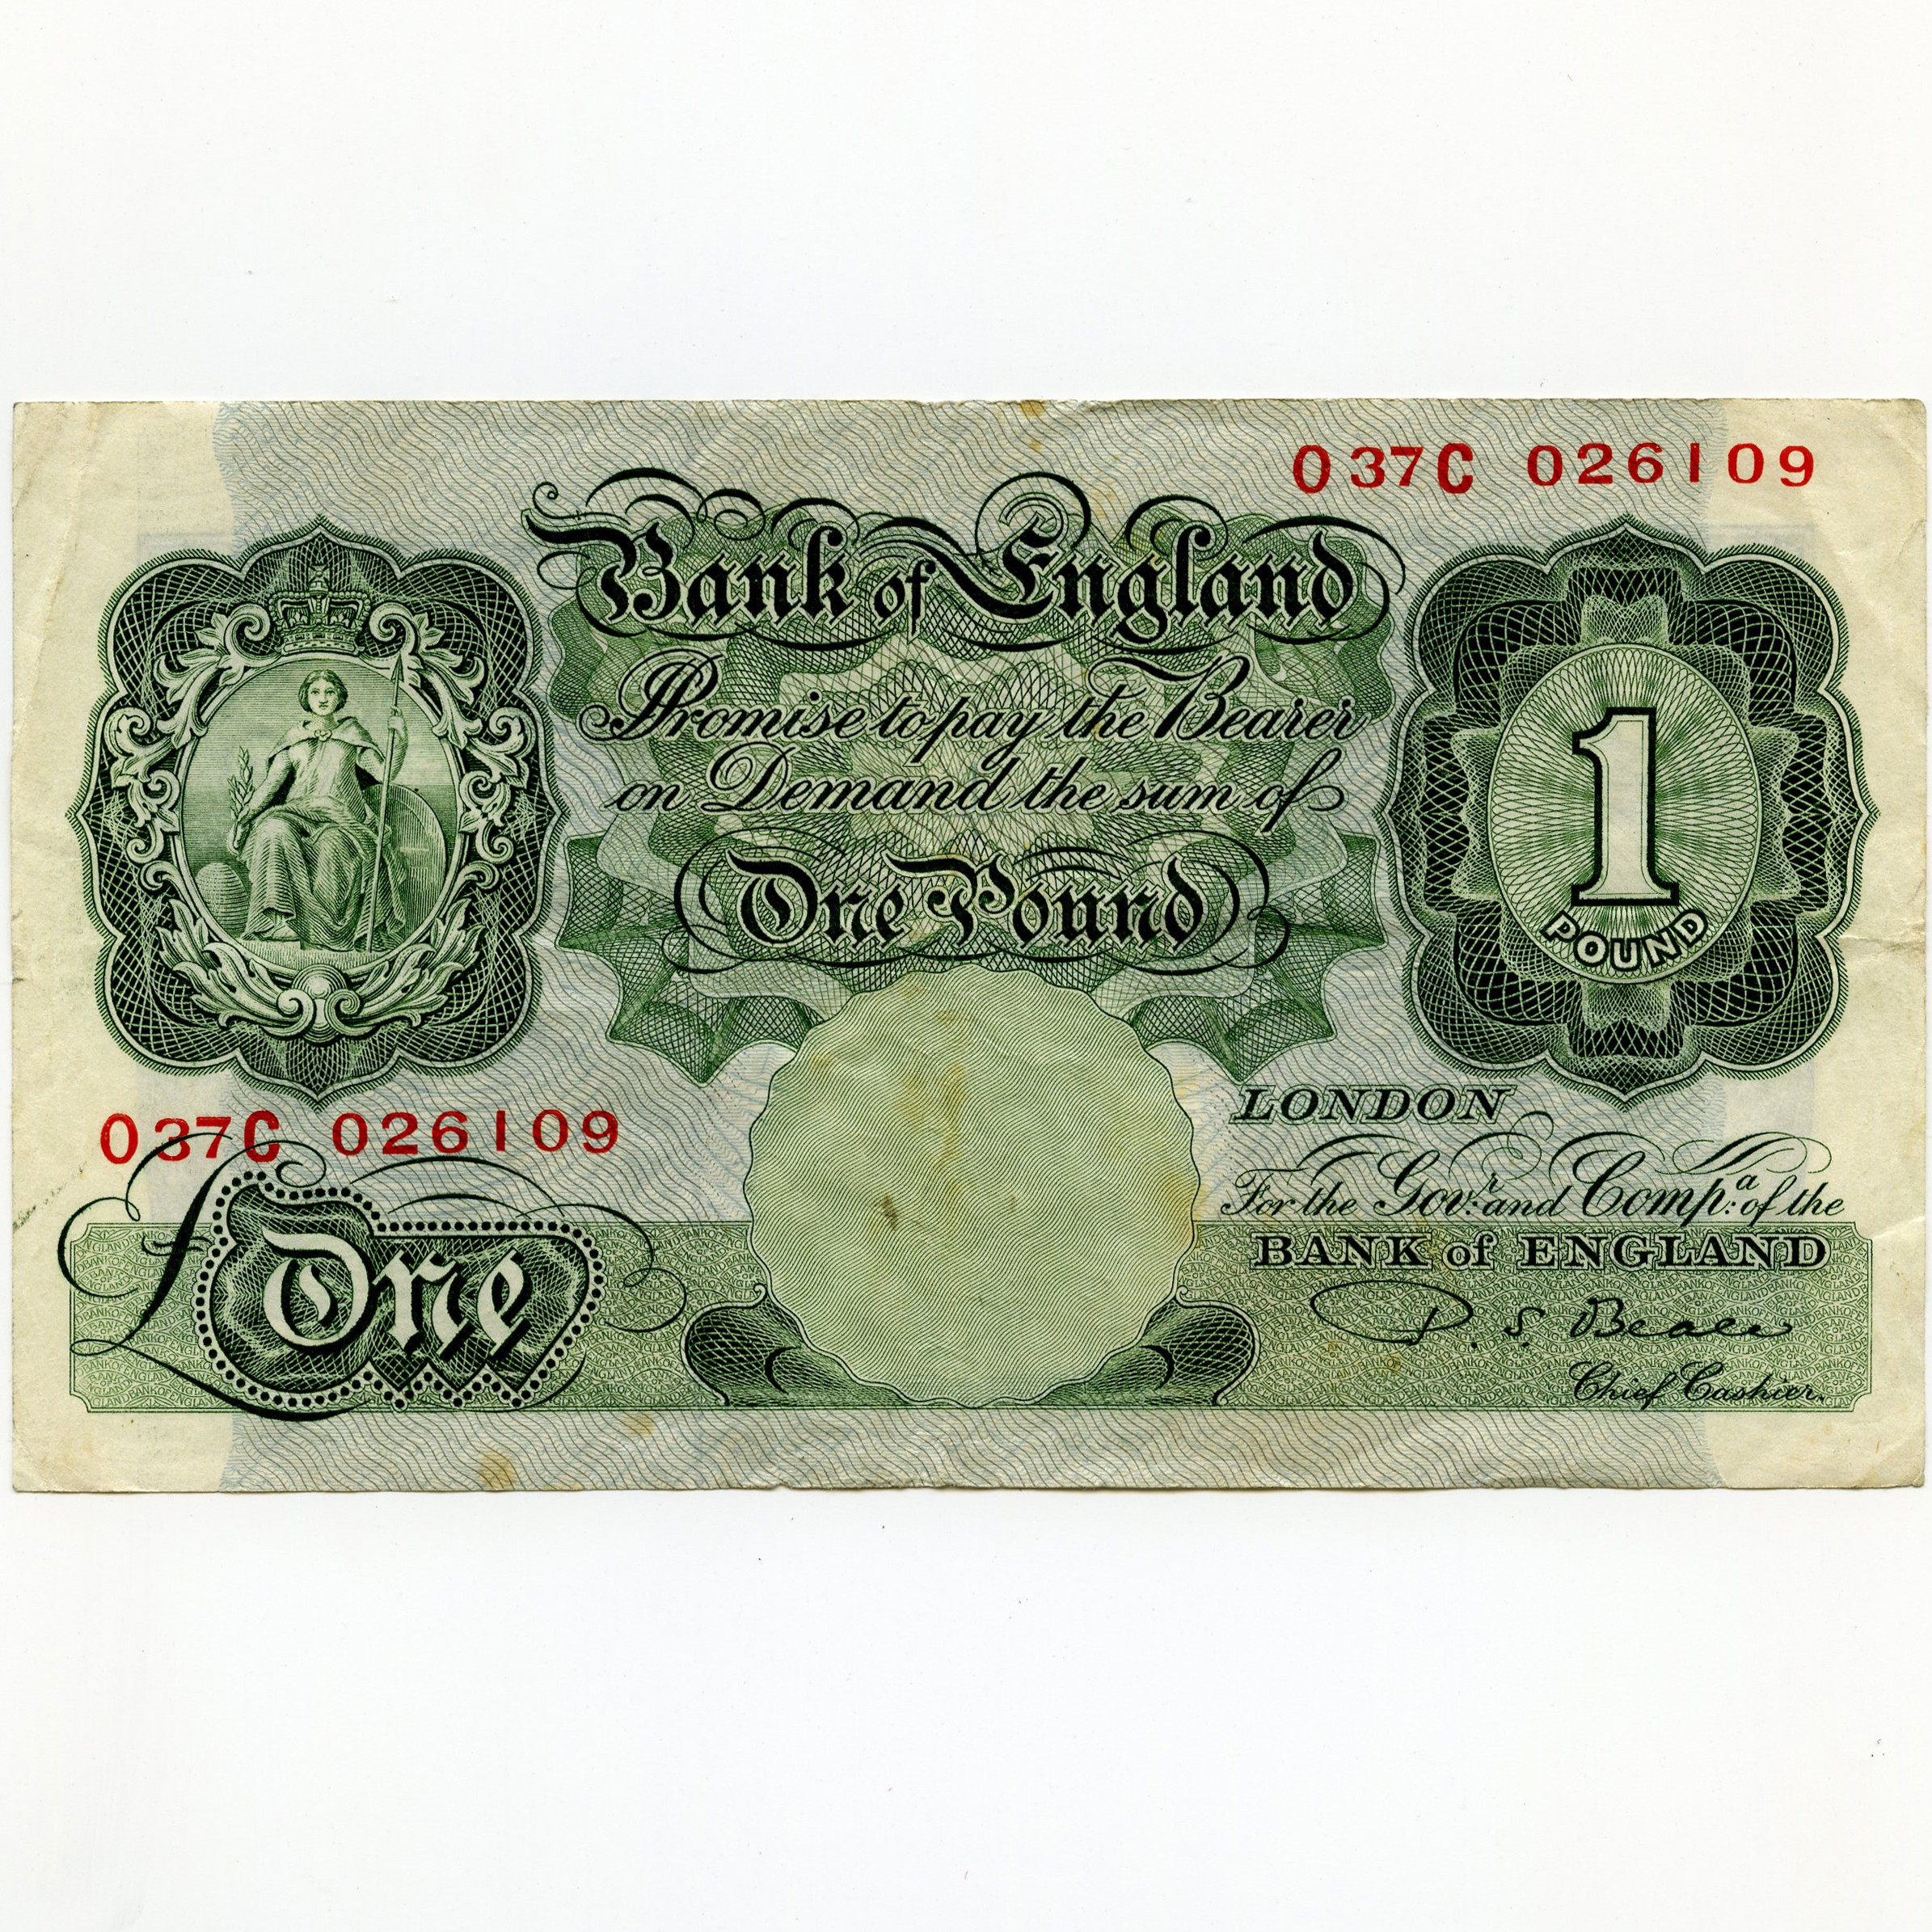 Grande Bretagne - 1 Pound - O37C026109 avers